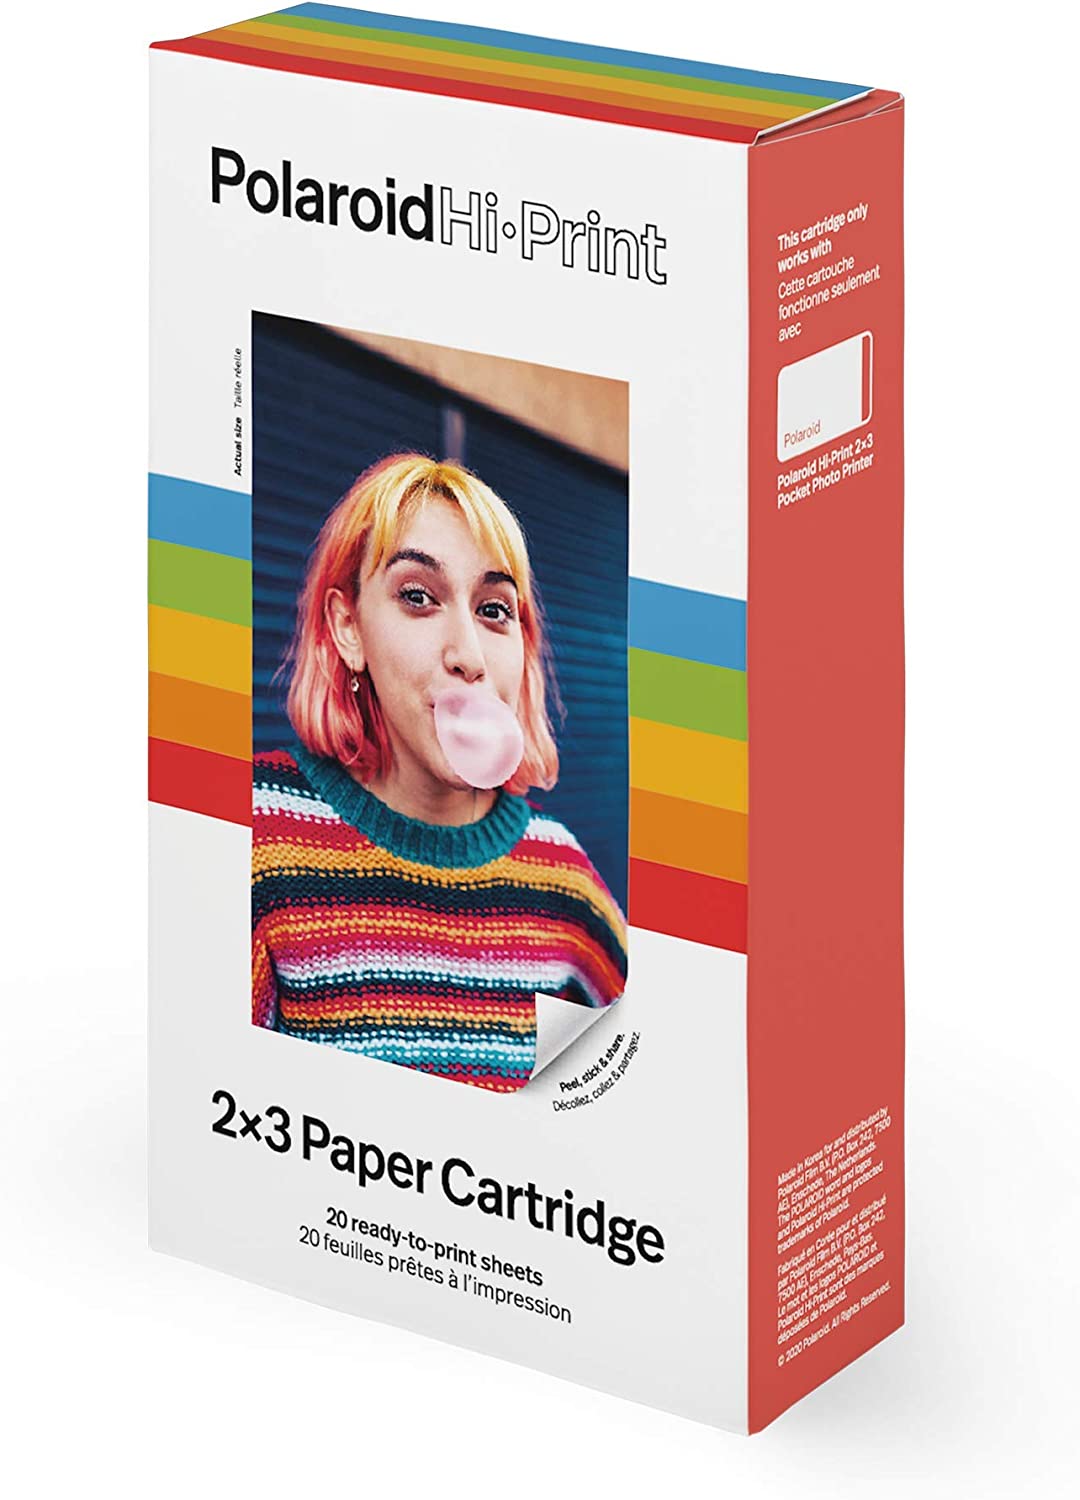 Polaroid - 6089 Hi-Print Paper - 2x3 Paper Cartridge (20 Sheets) Dye-Sub (Not Zink) Cartridge